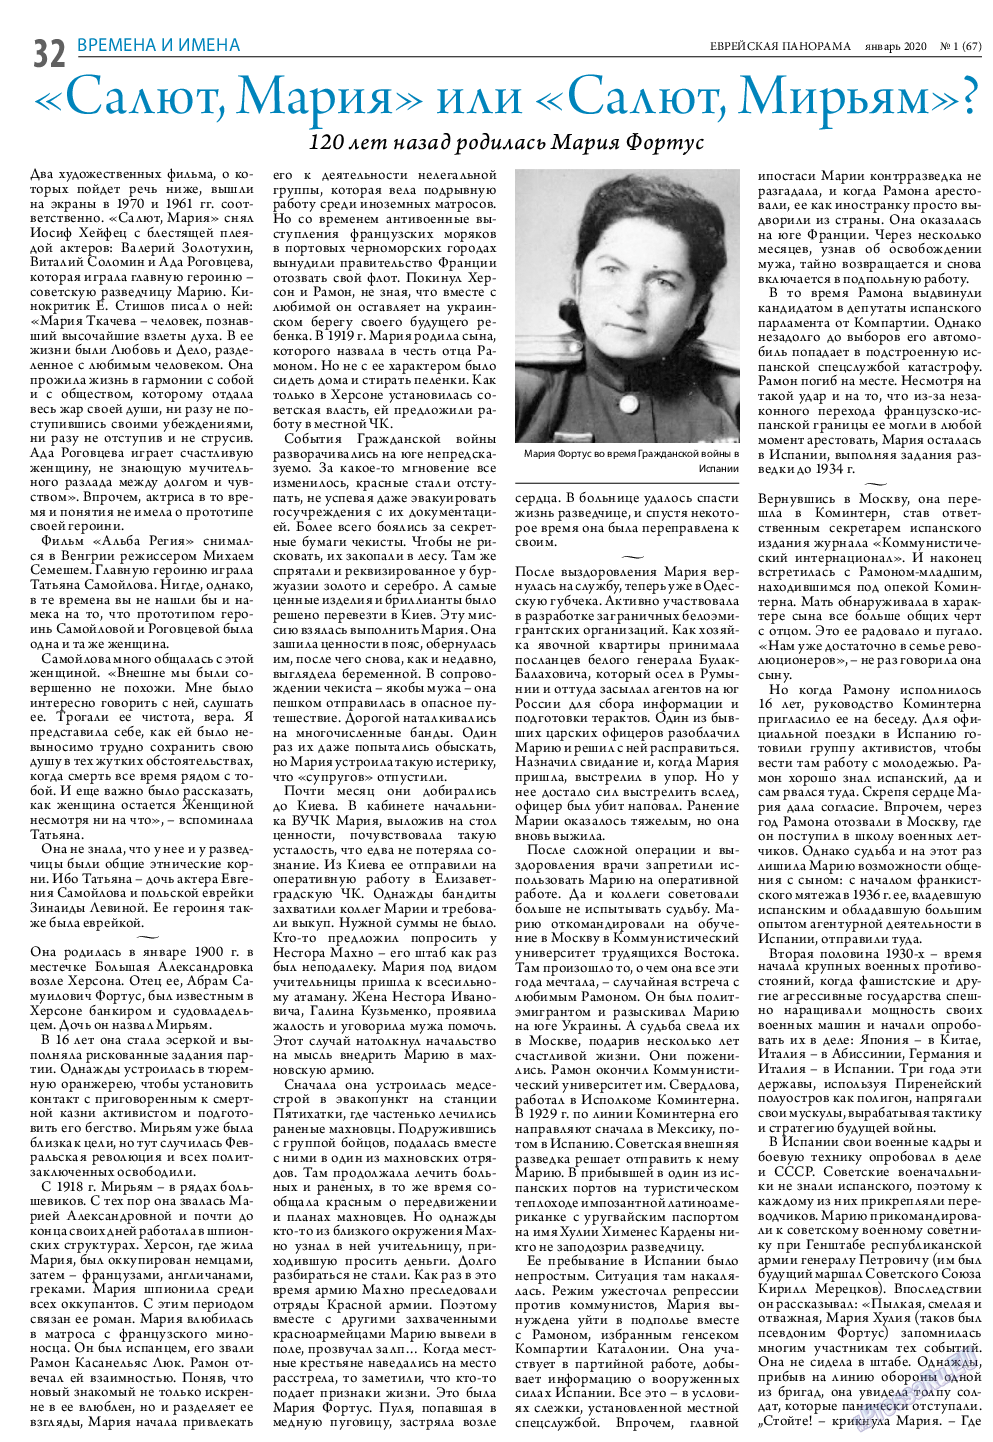 Еврейская панорама, газета. 2020 №1 стр.32